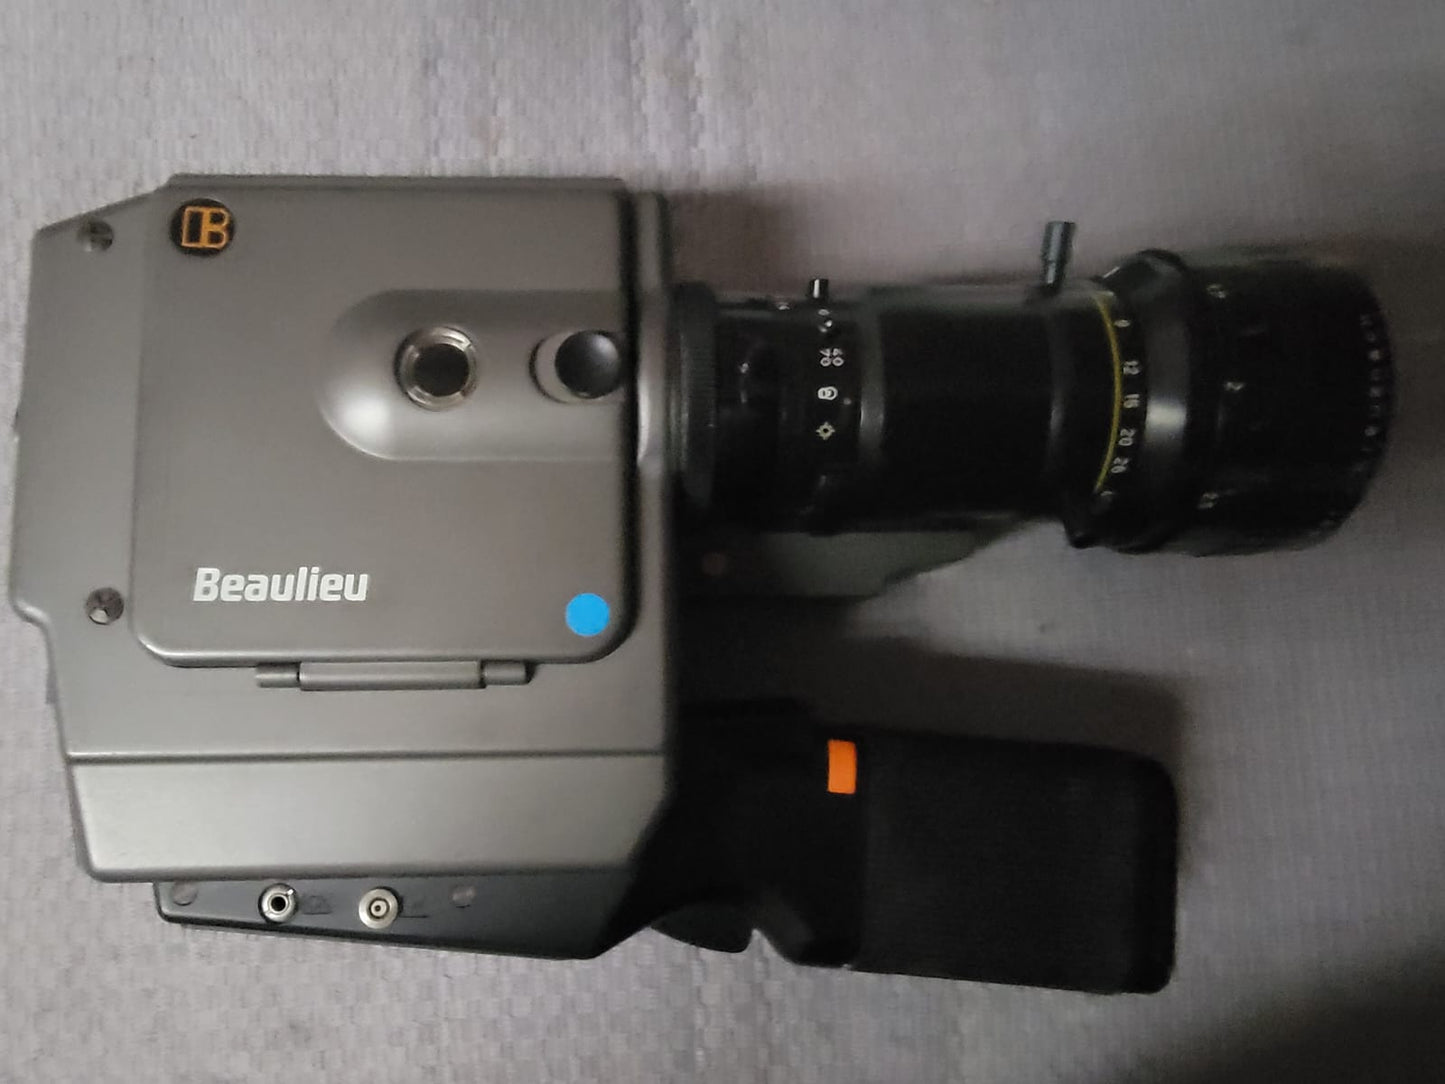 Beaulieu 6008 S Hall Sensor System Super 8mm Camera with Beaulieu Optivaron Schneider 6-70mm T1.4 Powered Zoom lens